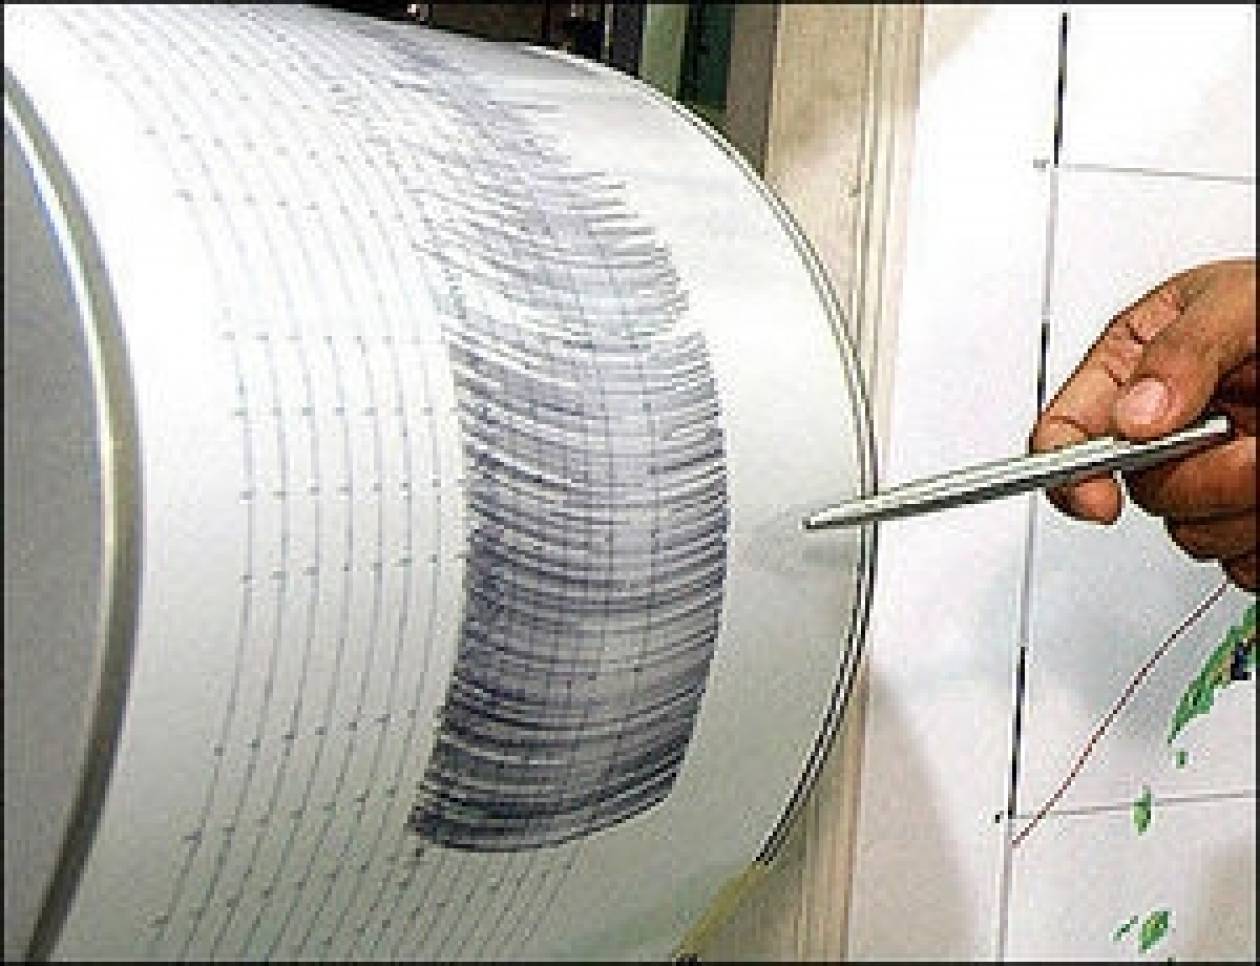 4 Richter earthquake in Κozani